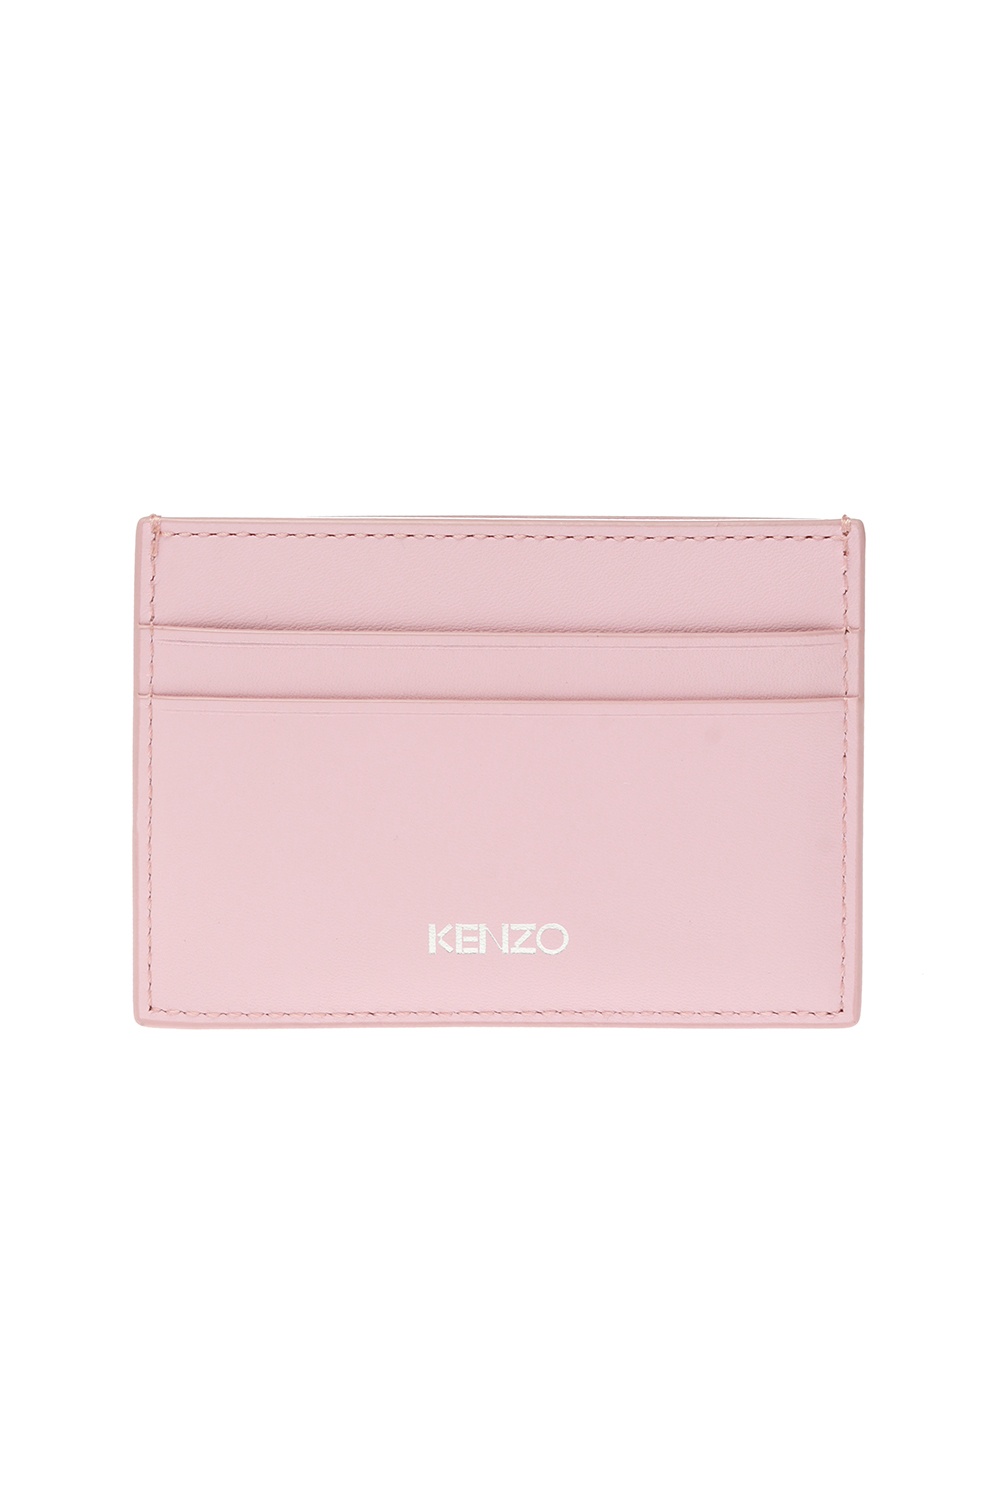 kenzo card holder pink